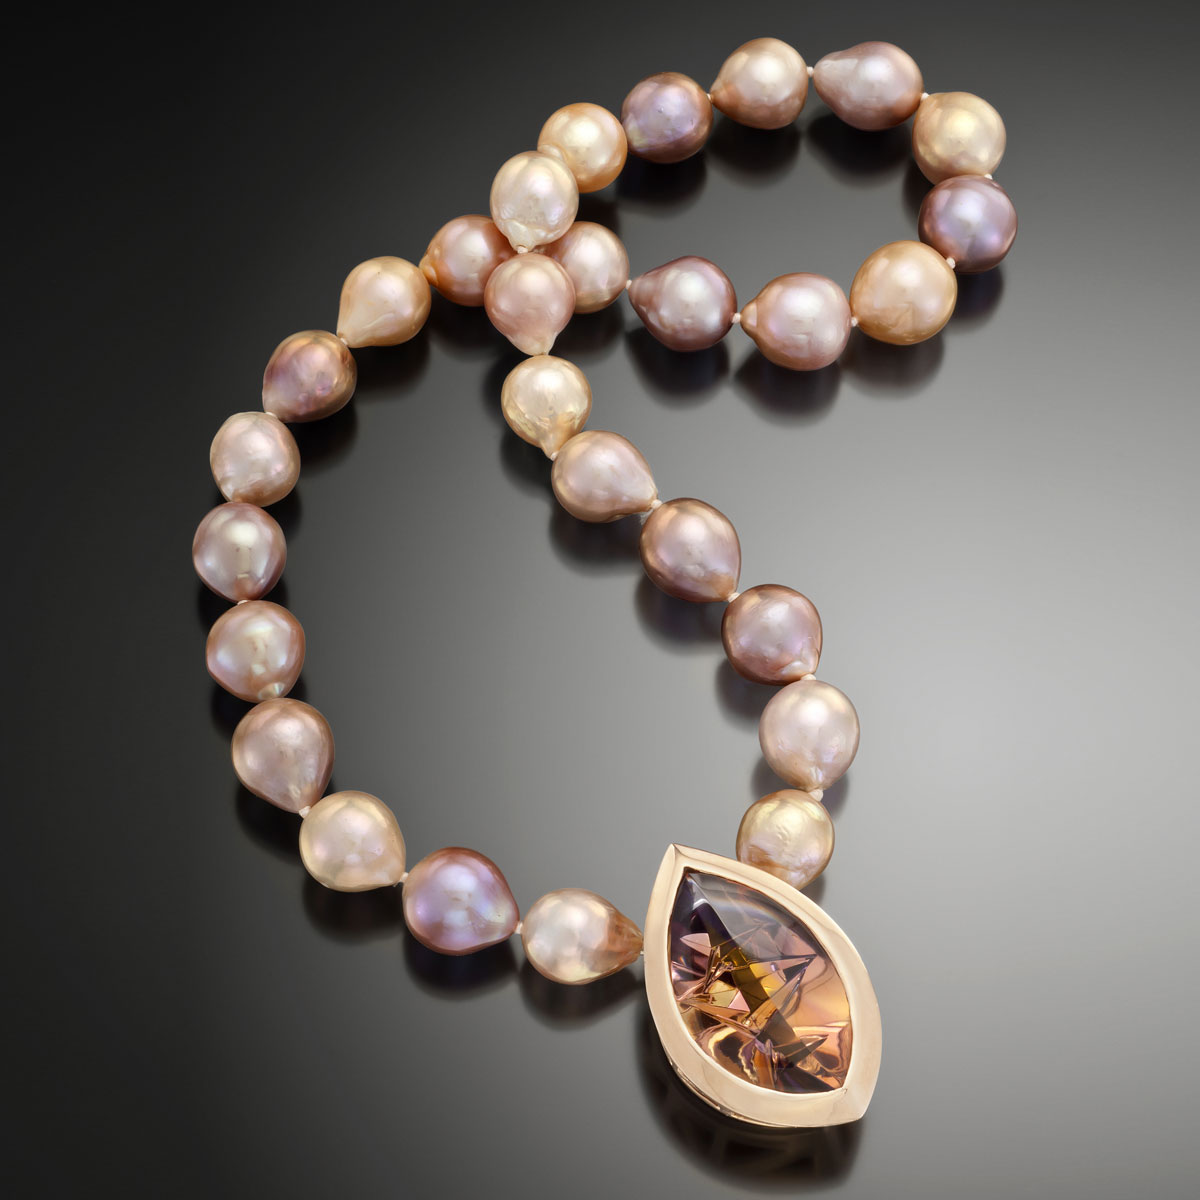 Sunset pearl ametrine necklace